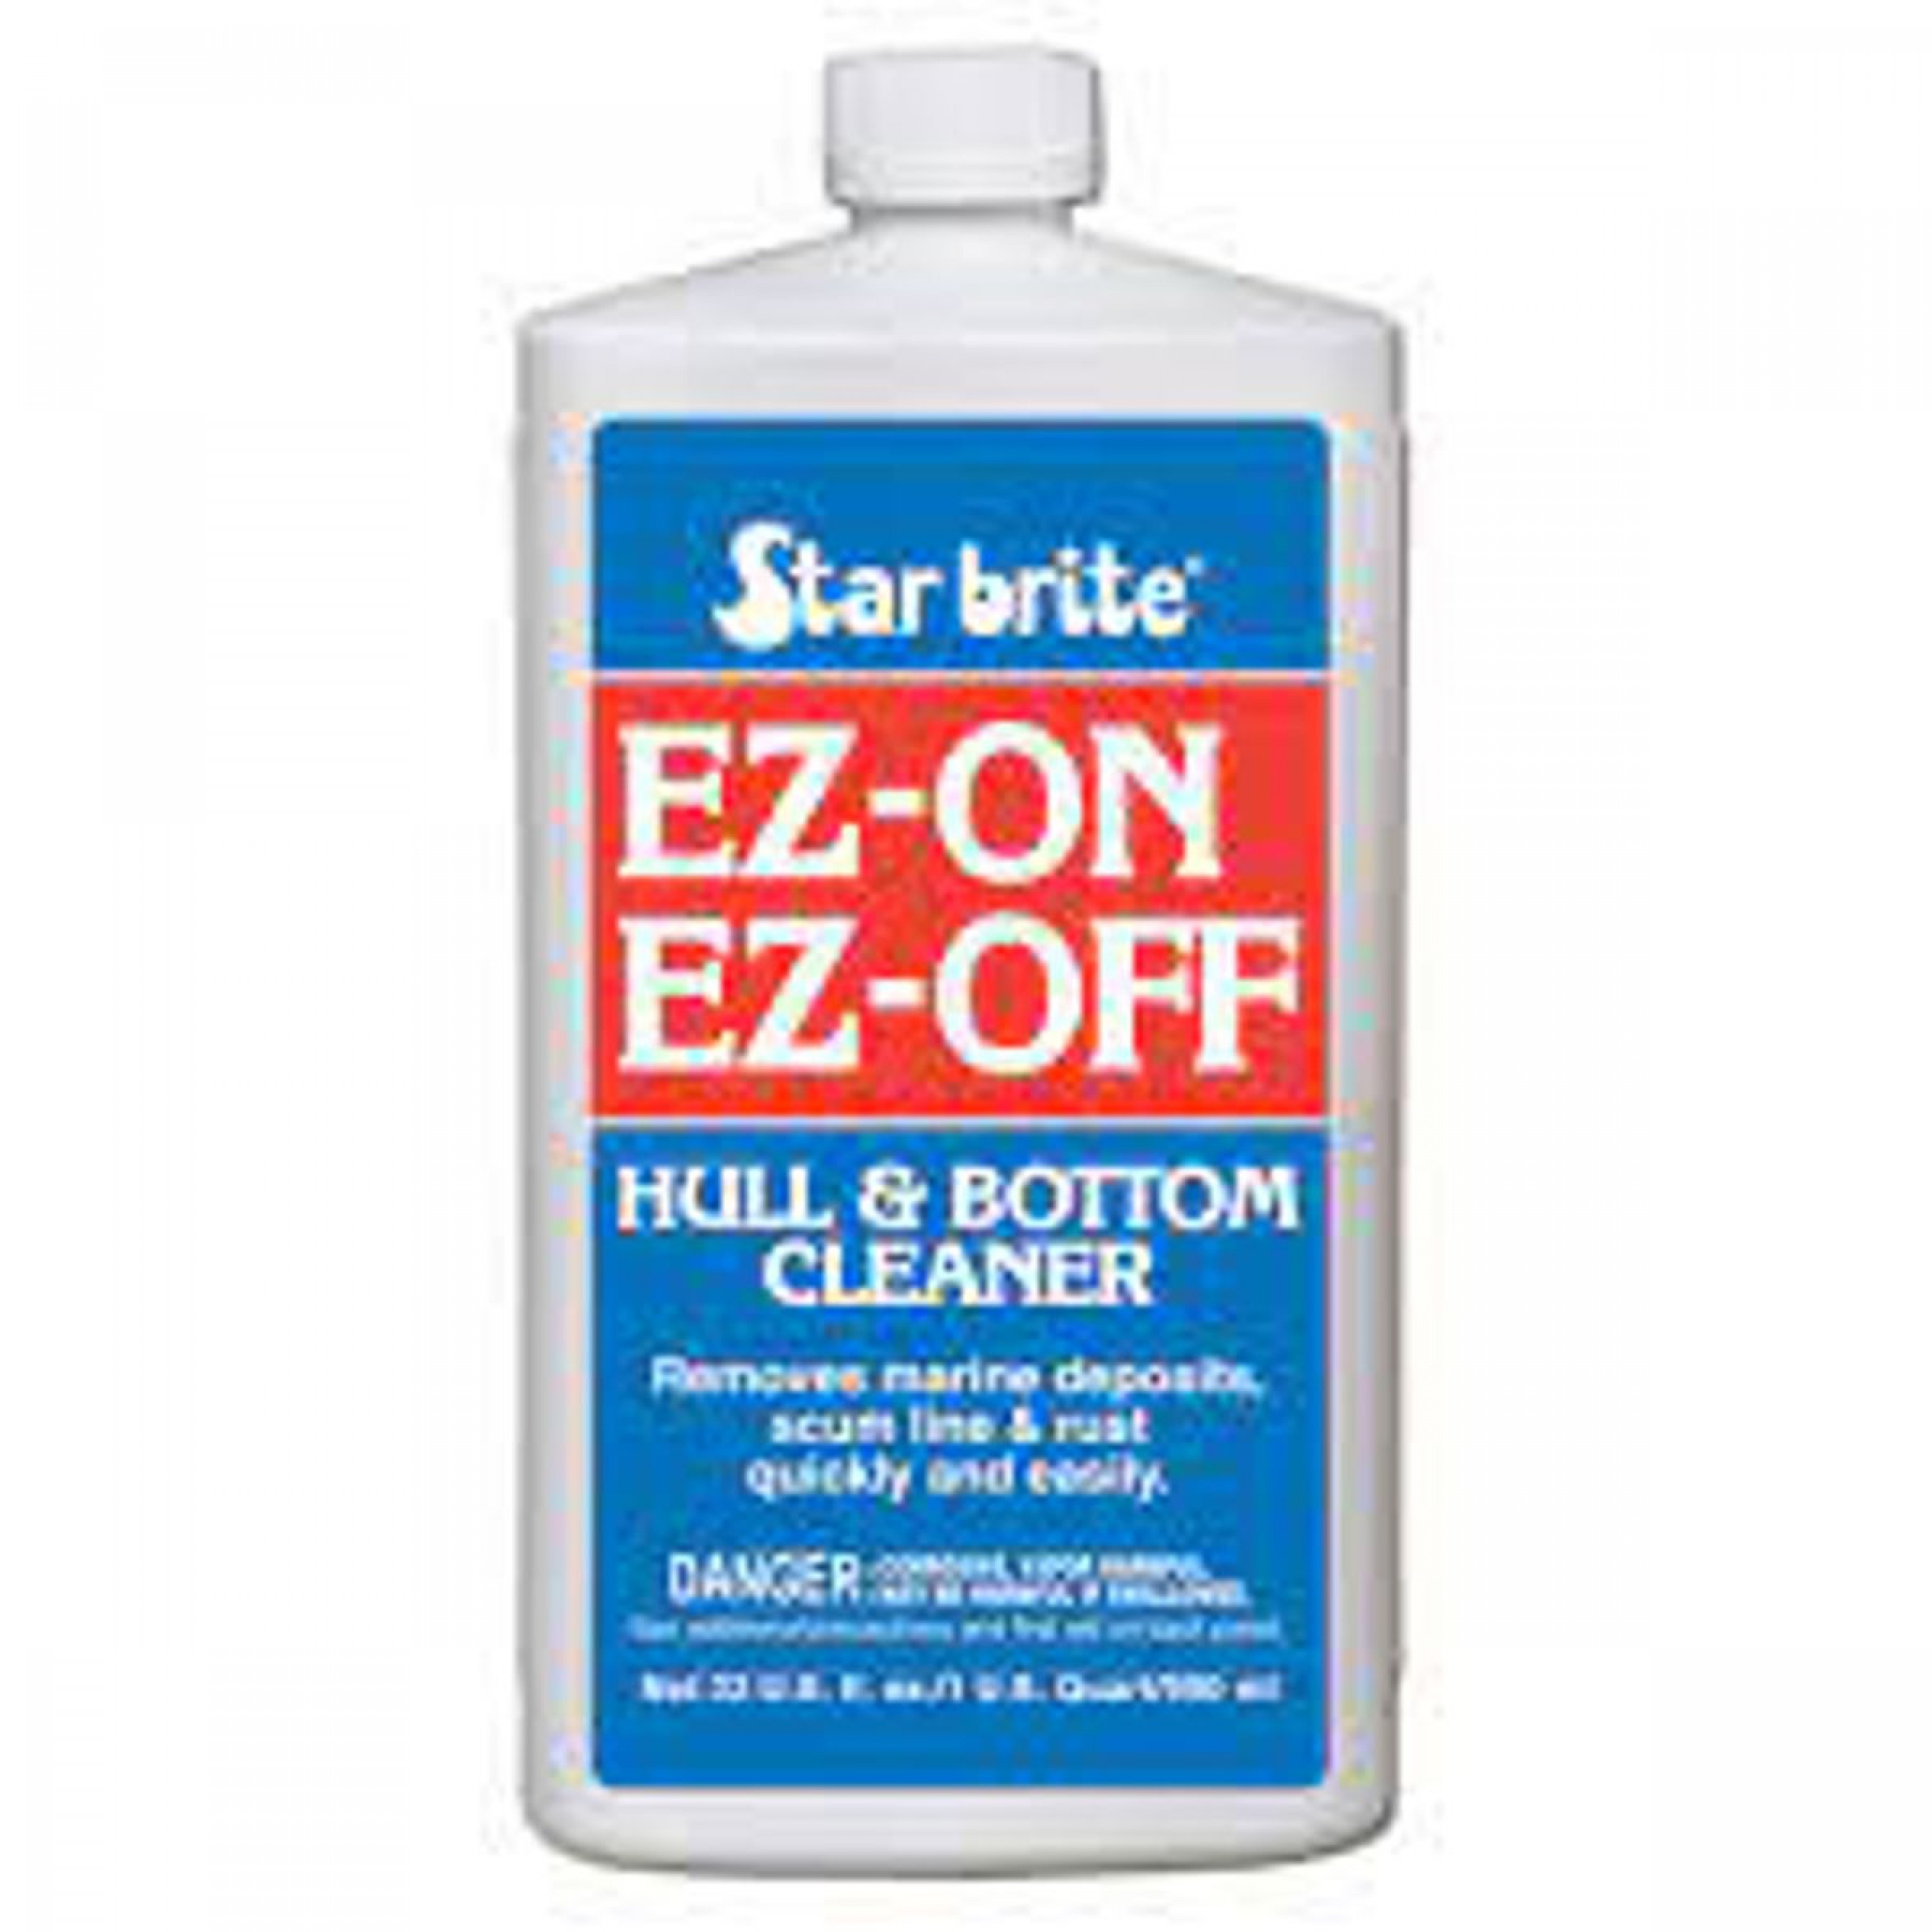 STARBRITE  EZ-ON EZ-OFF HULL AND BOTTOM CLEANER